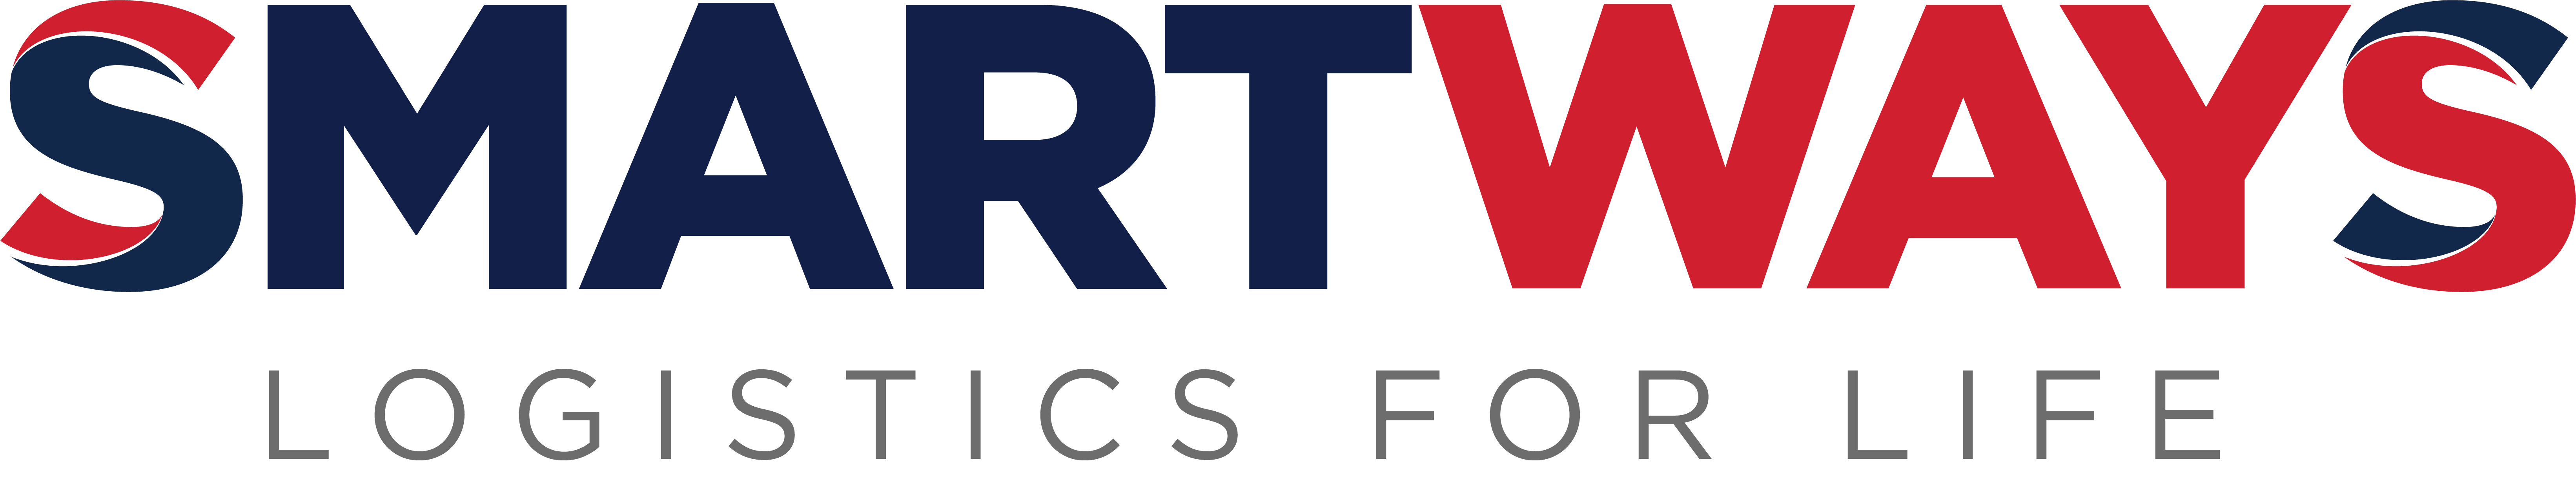 smartways logo